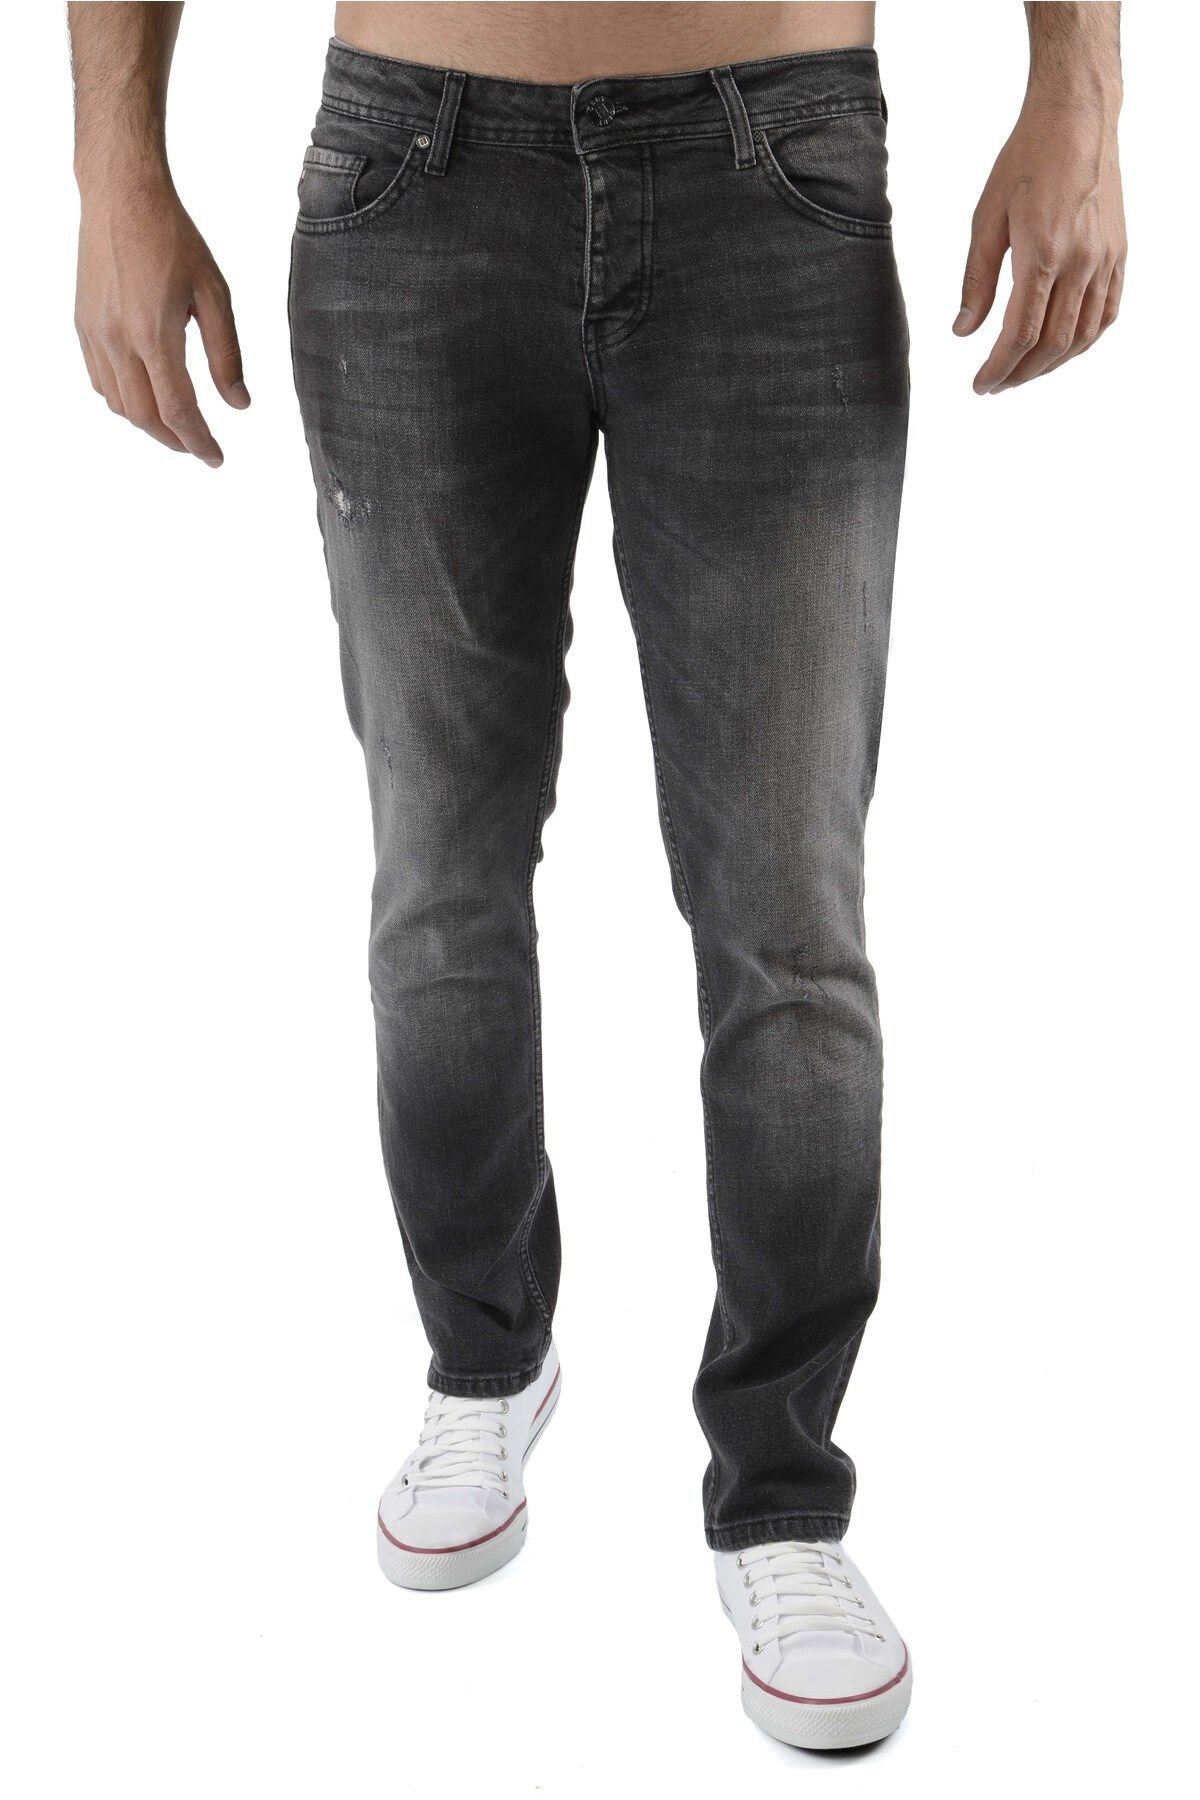 CEDY DENIM Erkek Kot Pantolon Slim Fit Jean C326